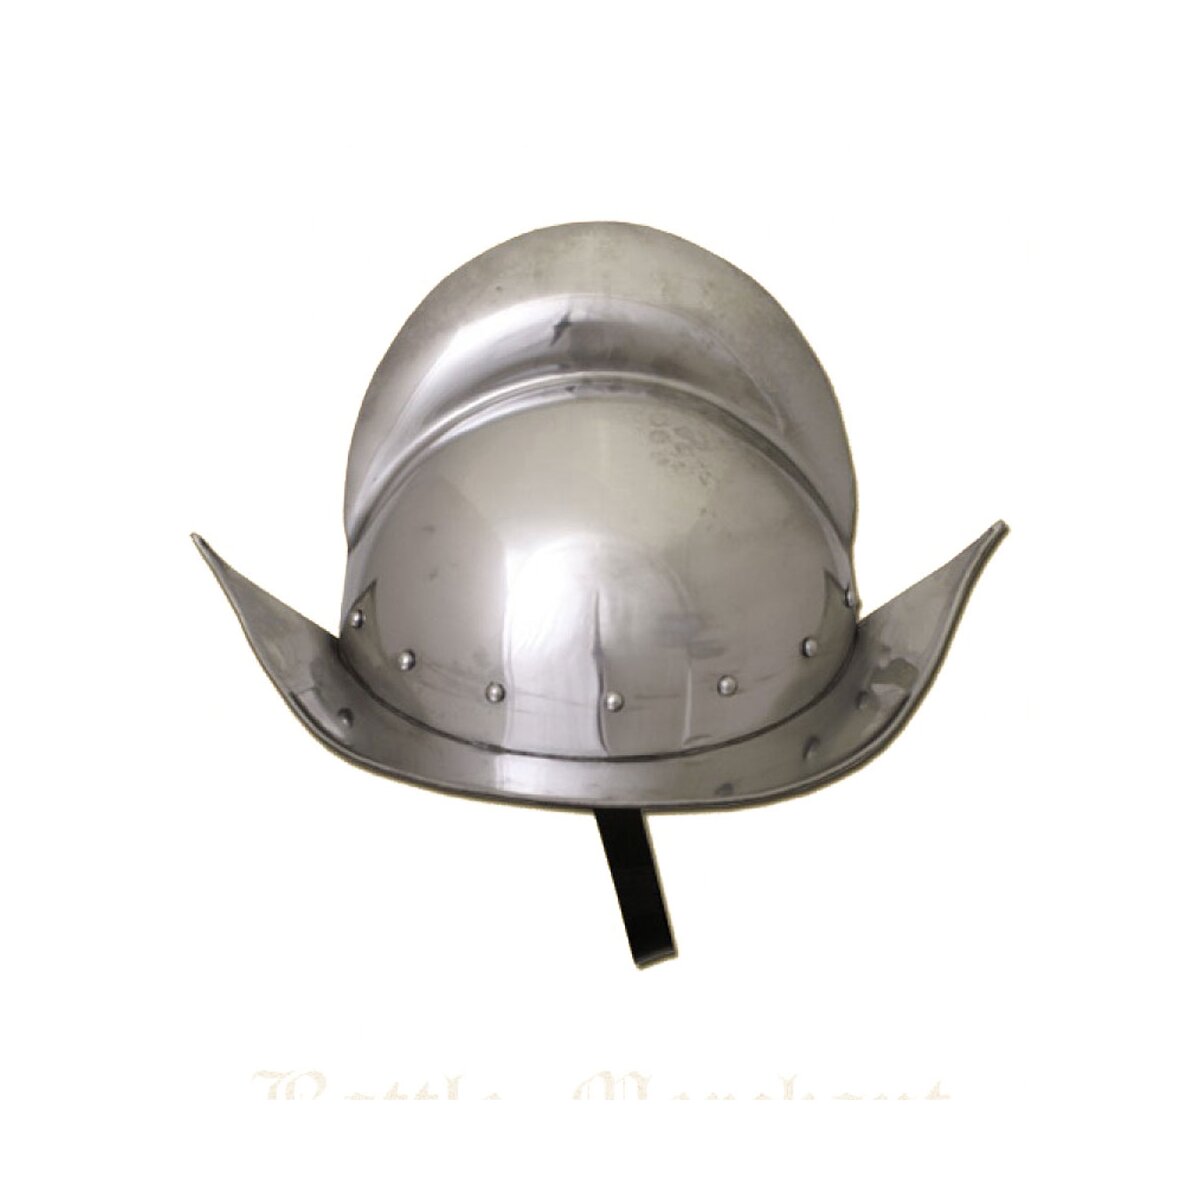 German Morion helmet, 1.6 mm steel